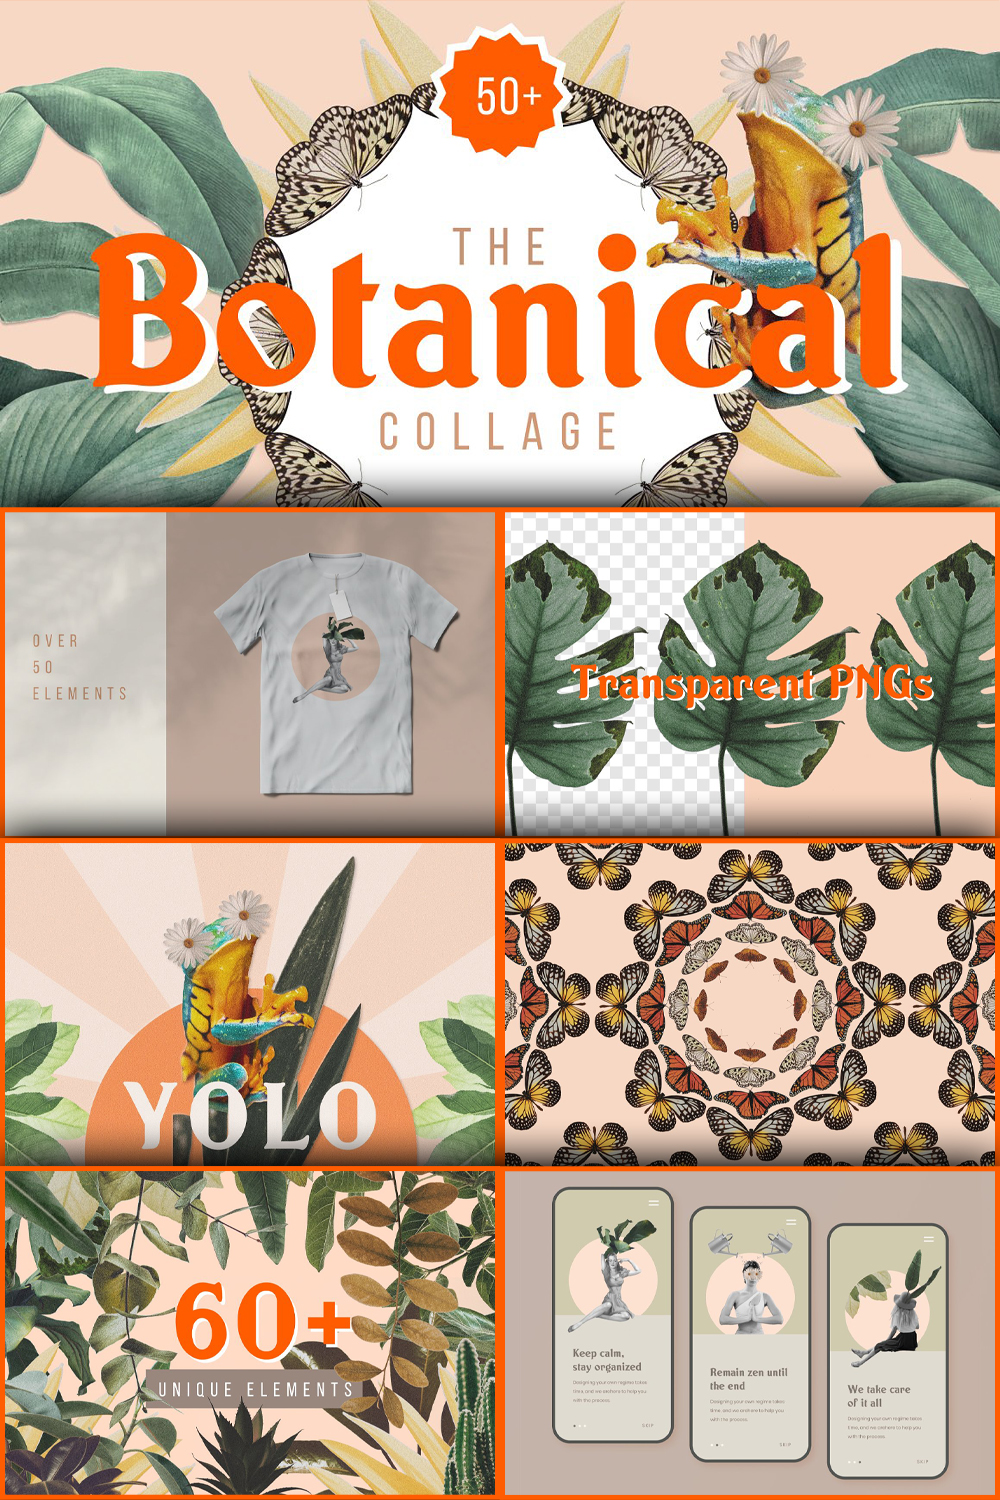 Botanical collage art maker elements of pinterest.